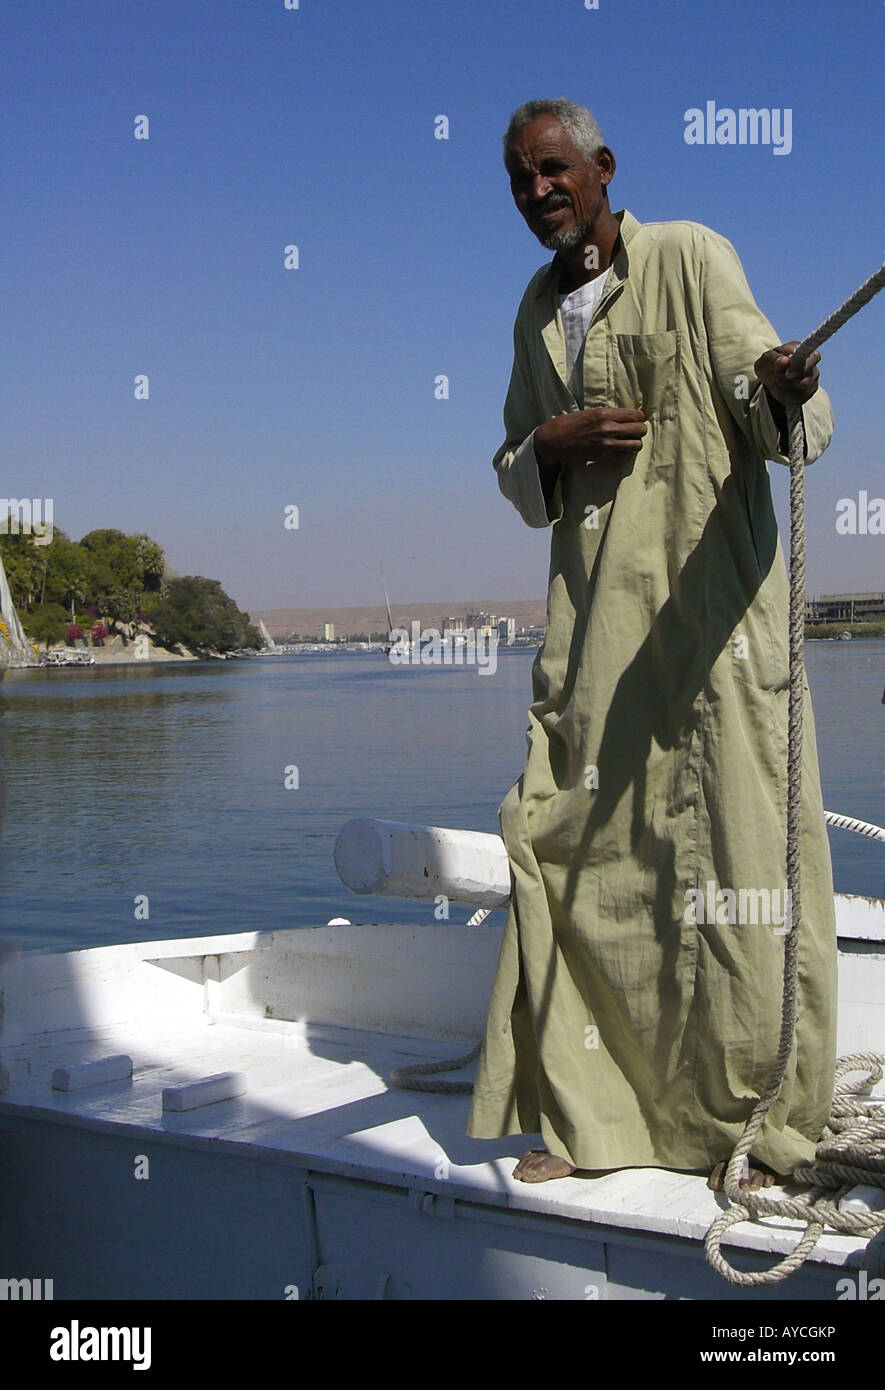 Man sailing felucca Aswan Egypt River Nile Stock Photo